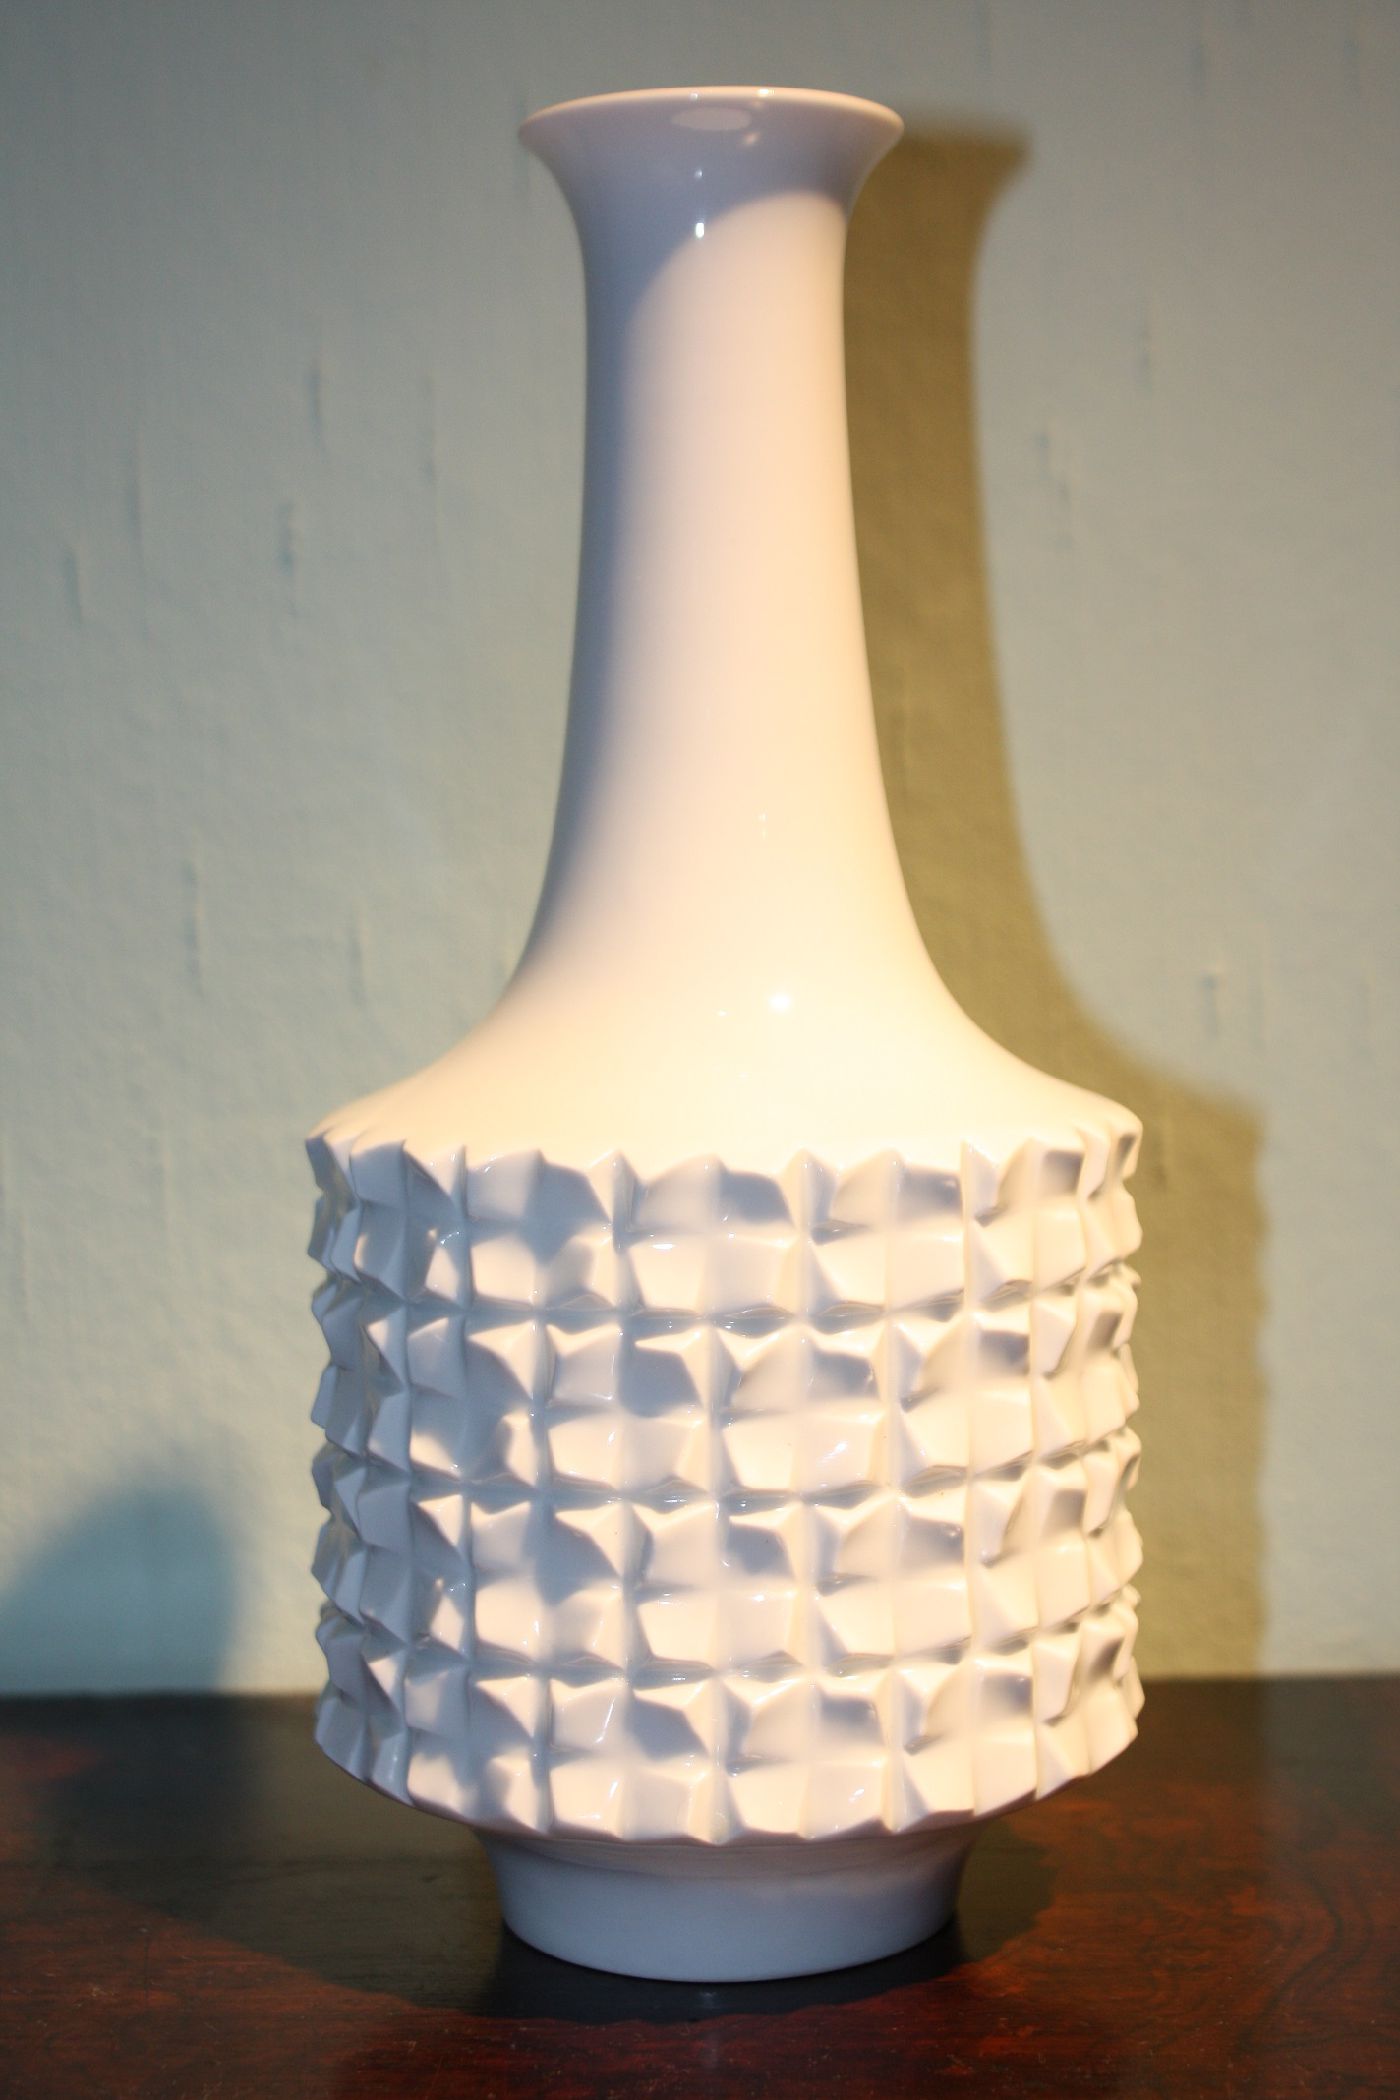 A decorative vintage 1960's all white and glazed design porcelain vase by Meissen